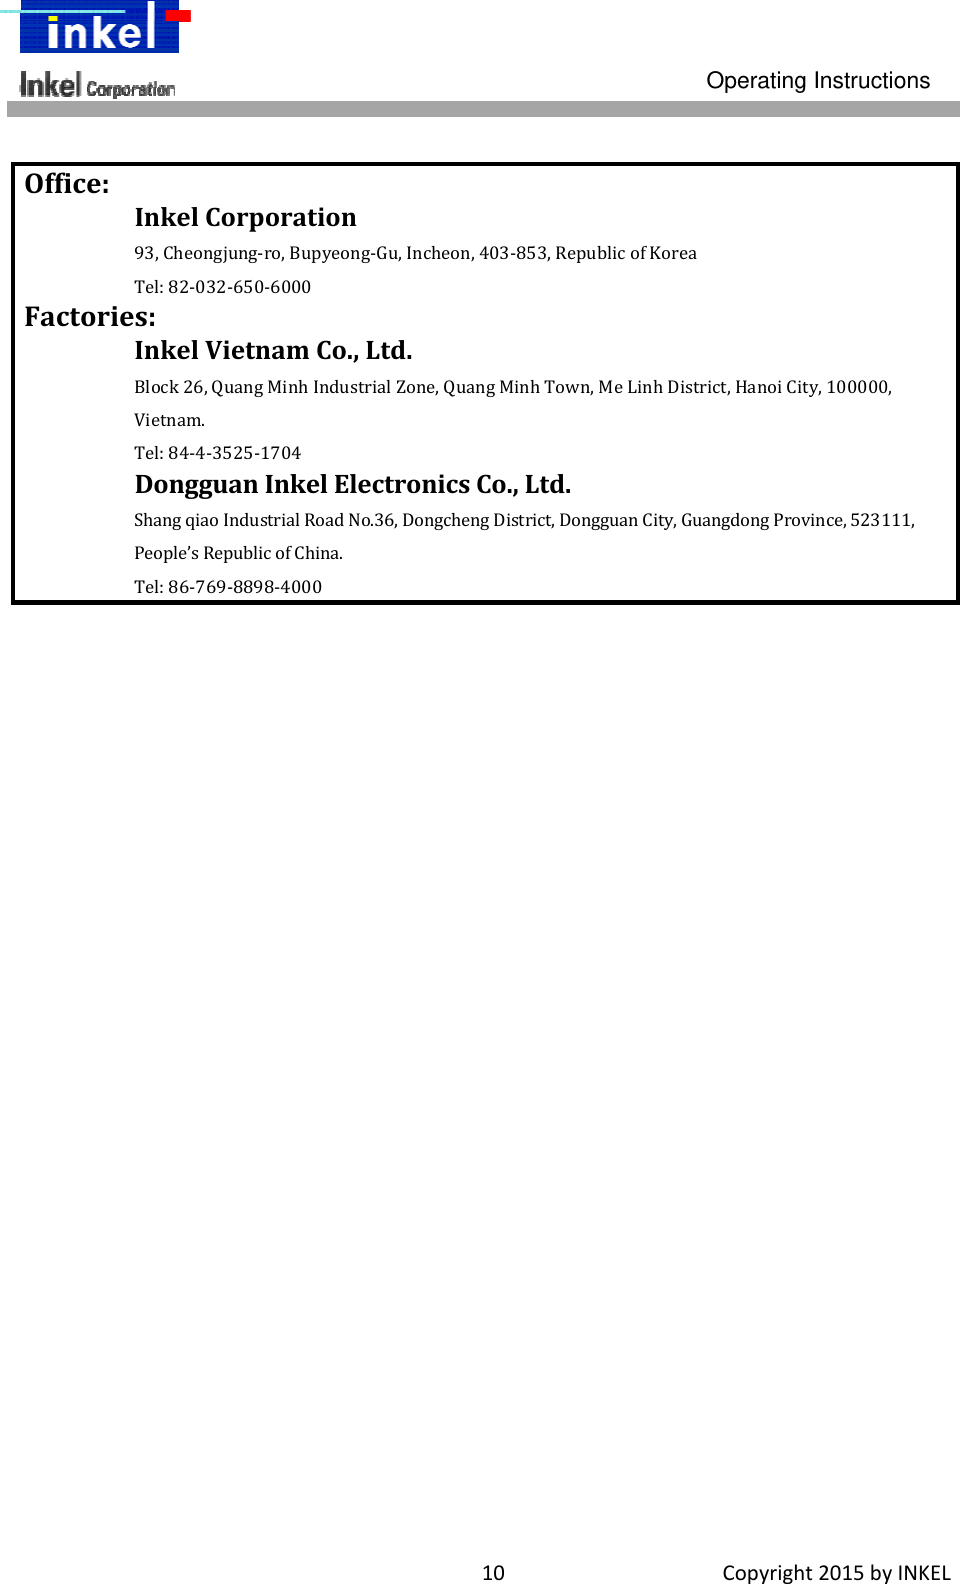 Operating Instructions 10Copyright2015byINKEL  Office:InkelCorporation93,Cheongjung‐ro,Bupyeong‐Gu,Incheon,403‐853,RepublicofKoreaTel:82‐032‐650‐6000Factories:InkelVietnamCo.,Ltd.Block26,QuangMinhIndustrialZone,QuangMinhTown,MeLinhDistrict,HanoiCity,100000,Vietnam.Tel:84‐4‐3525‐1704DongguanInkelElectronicsCo.,Ltd.ShangqiaoIndustrialRoadNo.36,DongchengDistrict,DongguanCity,GuangdongProvince,523111,People’sRepublicofChina.Tel:86‐769‐8898‐4000 